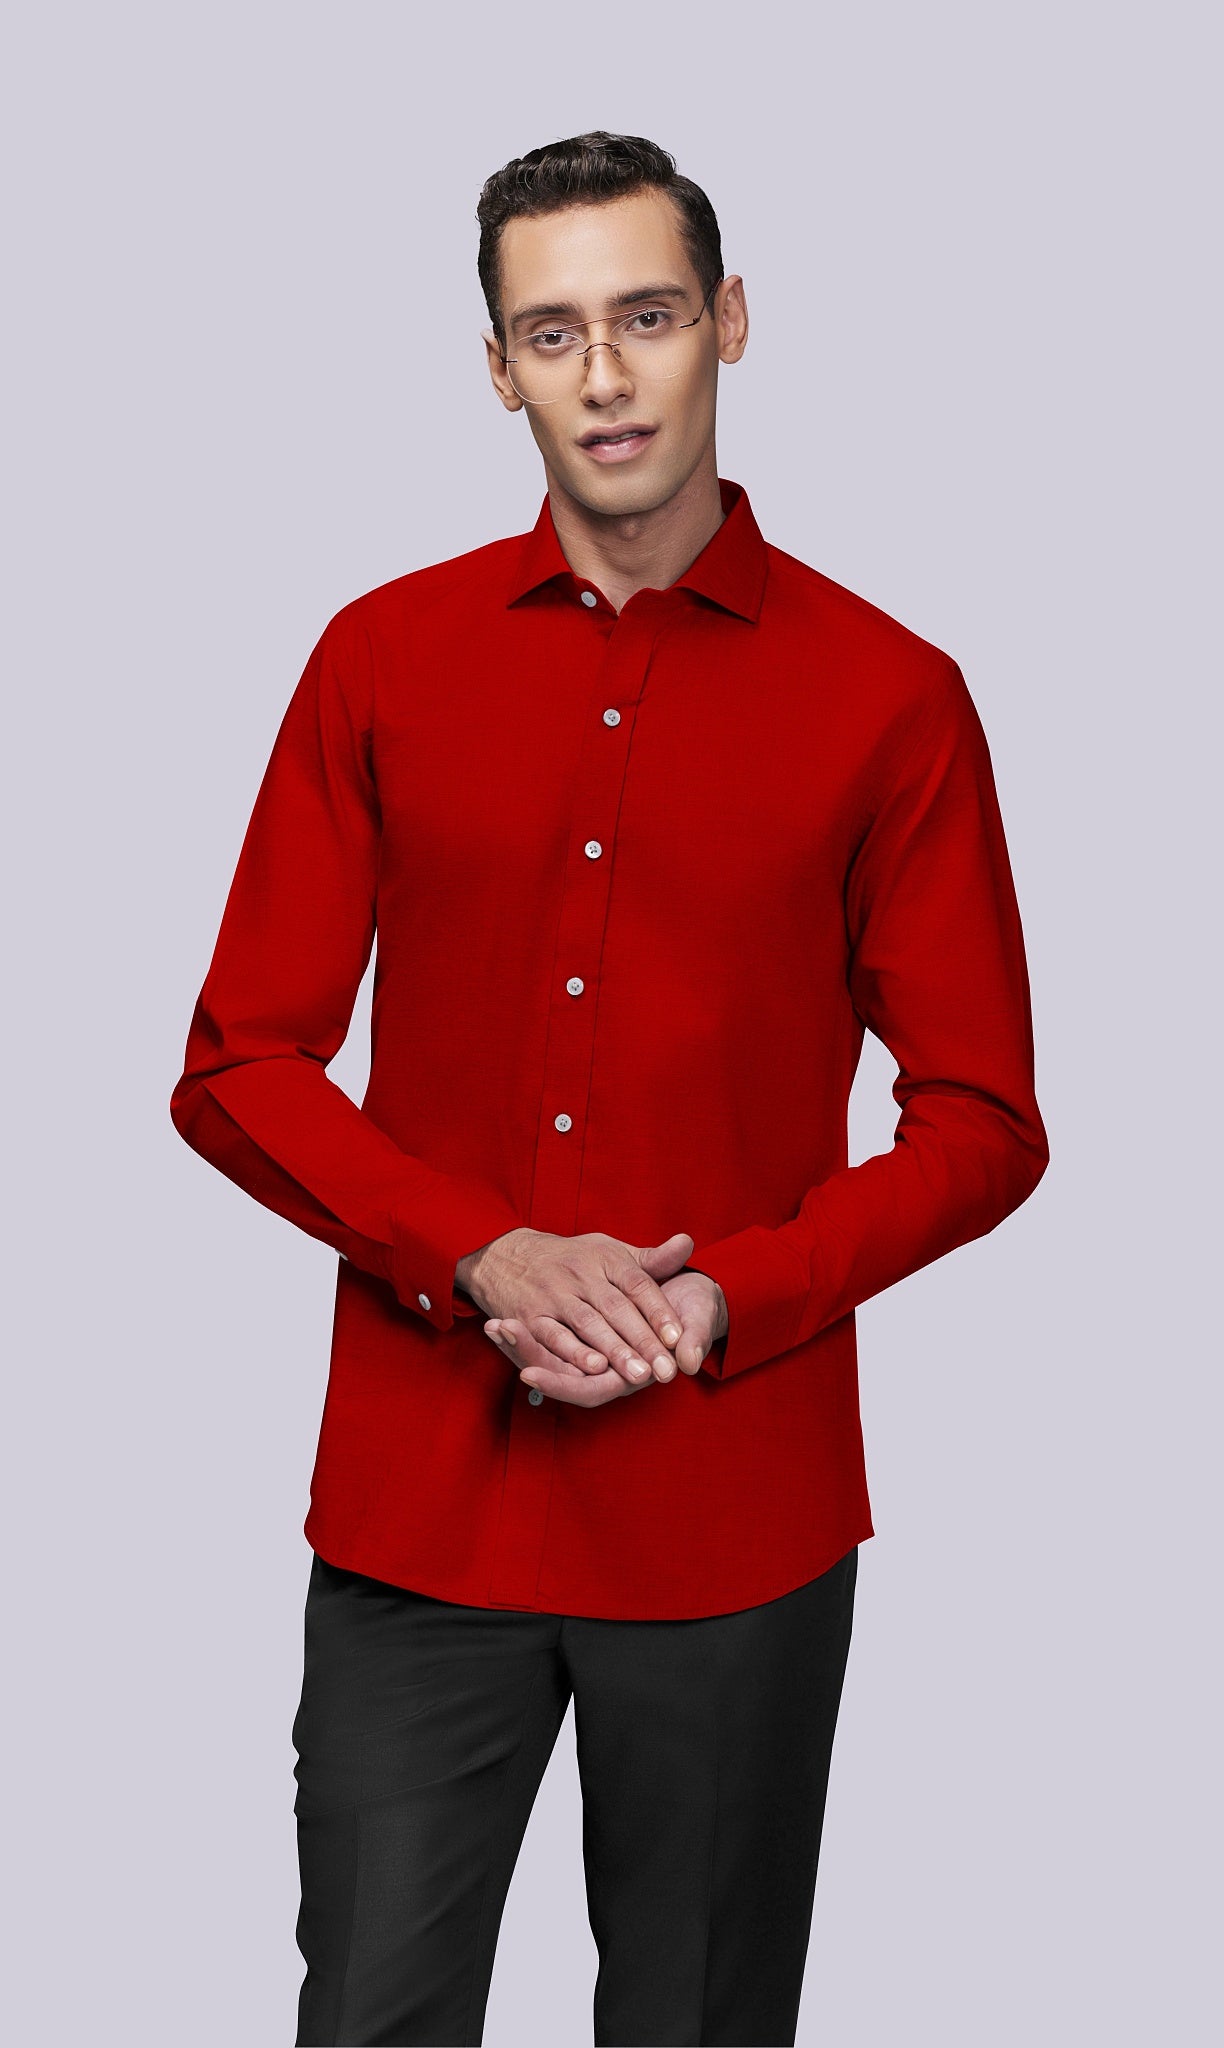 Men's Red Shirt